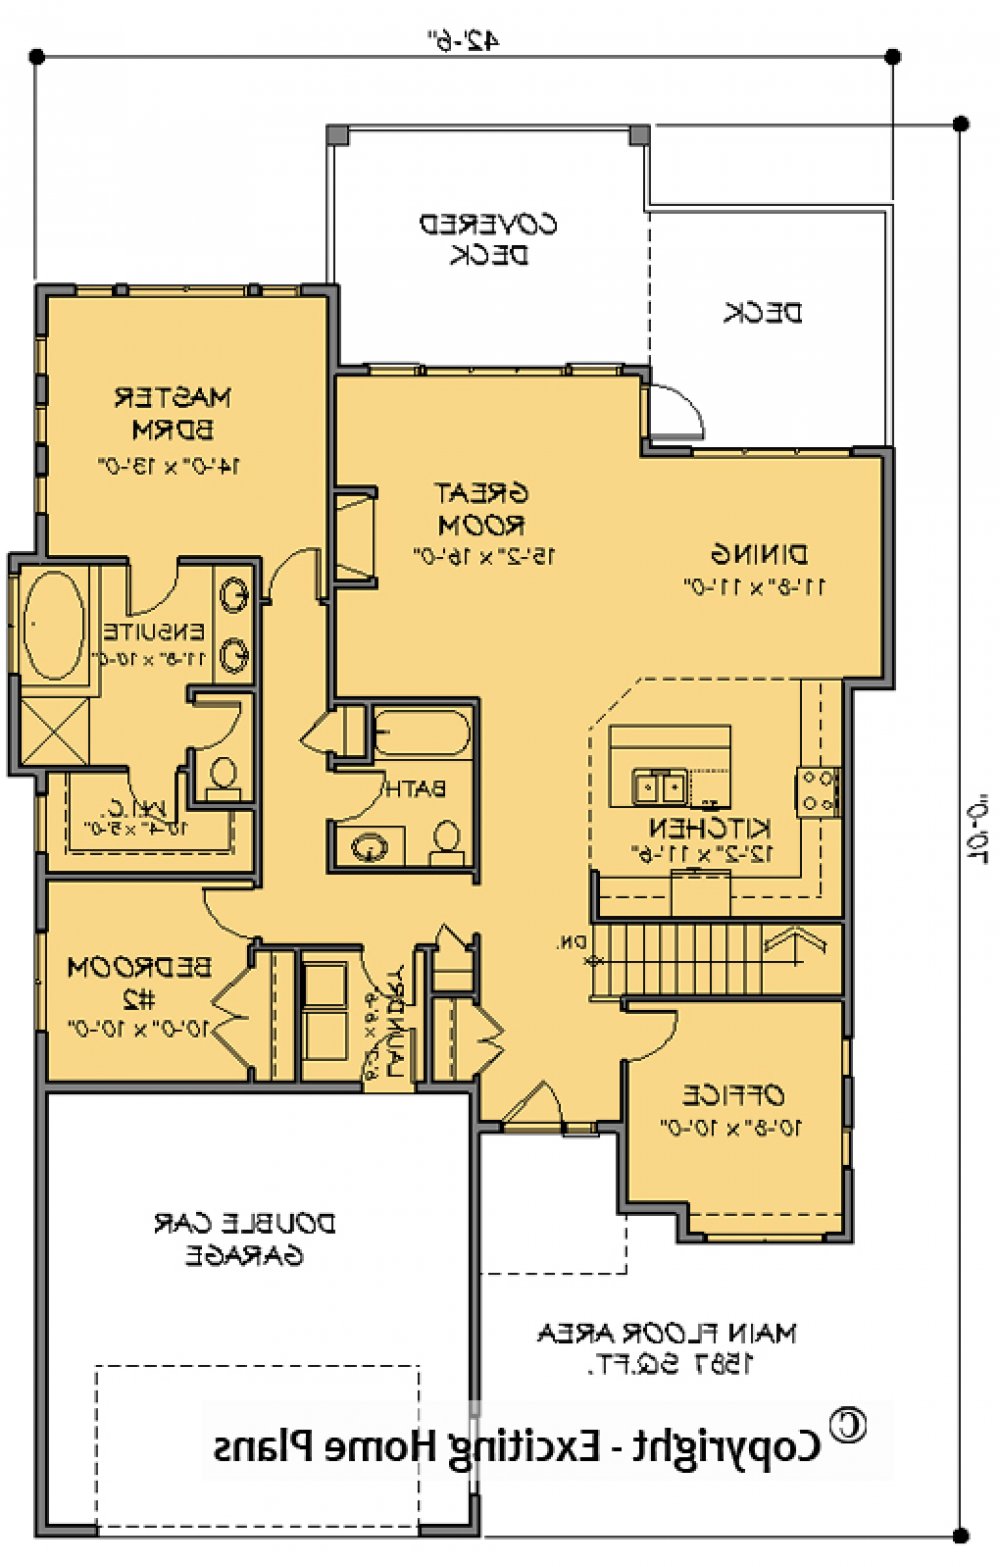 House Plan E1731-50 Main Floor Plan REVERSE